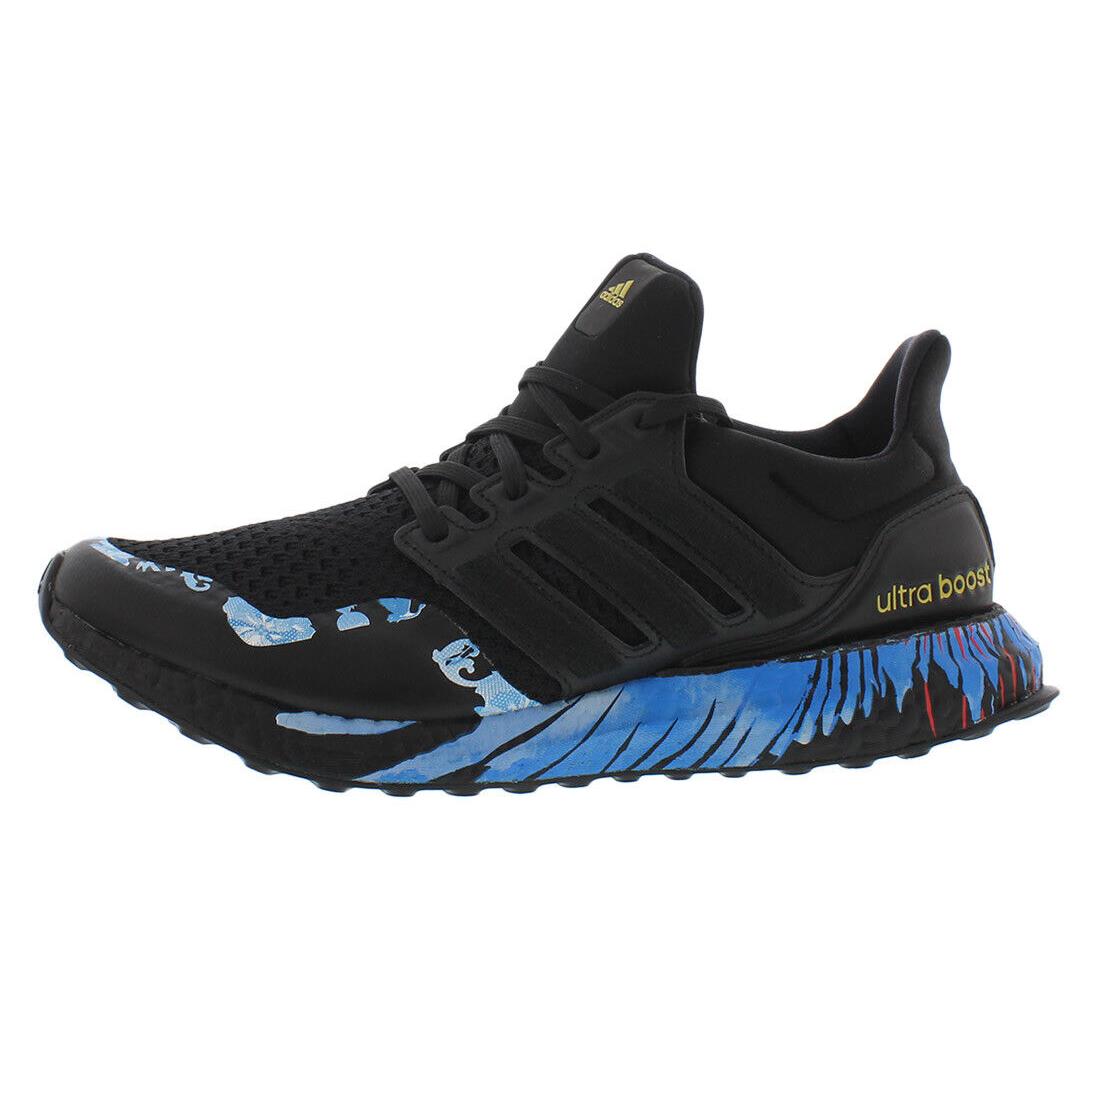 Adidas Ultraboost Dna Mens Shoes Size 7.5 Color: Black/blue Ocean - Black/Blue Ocean, Main: Black